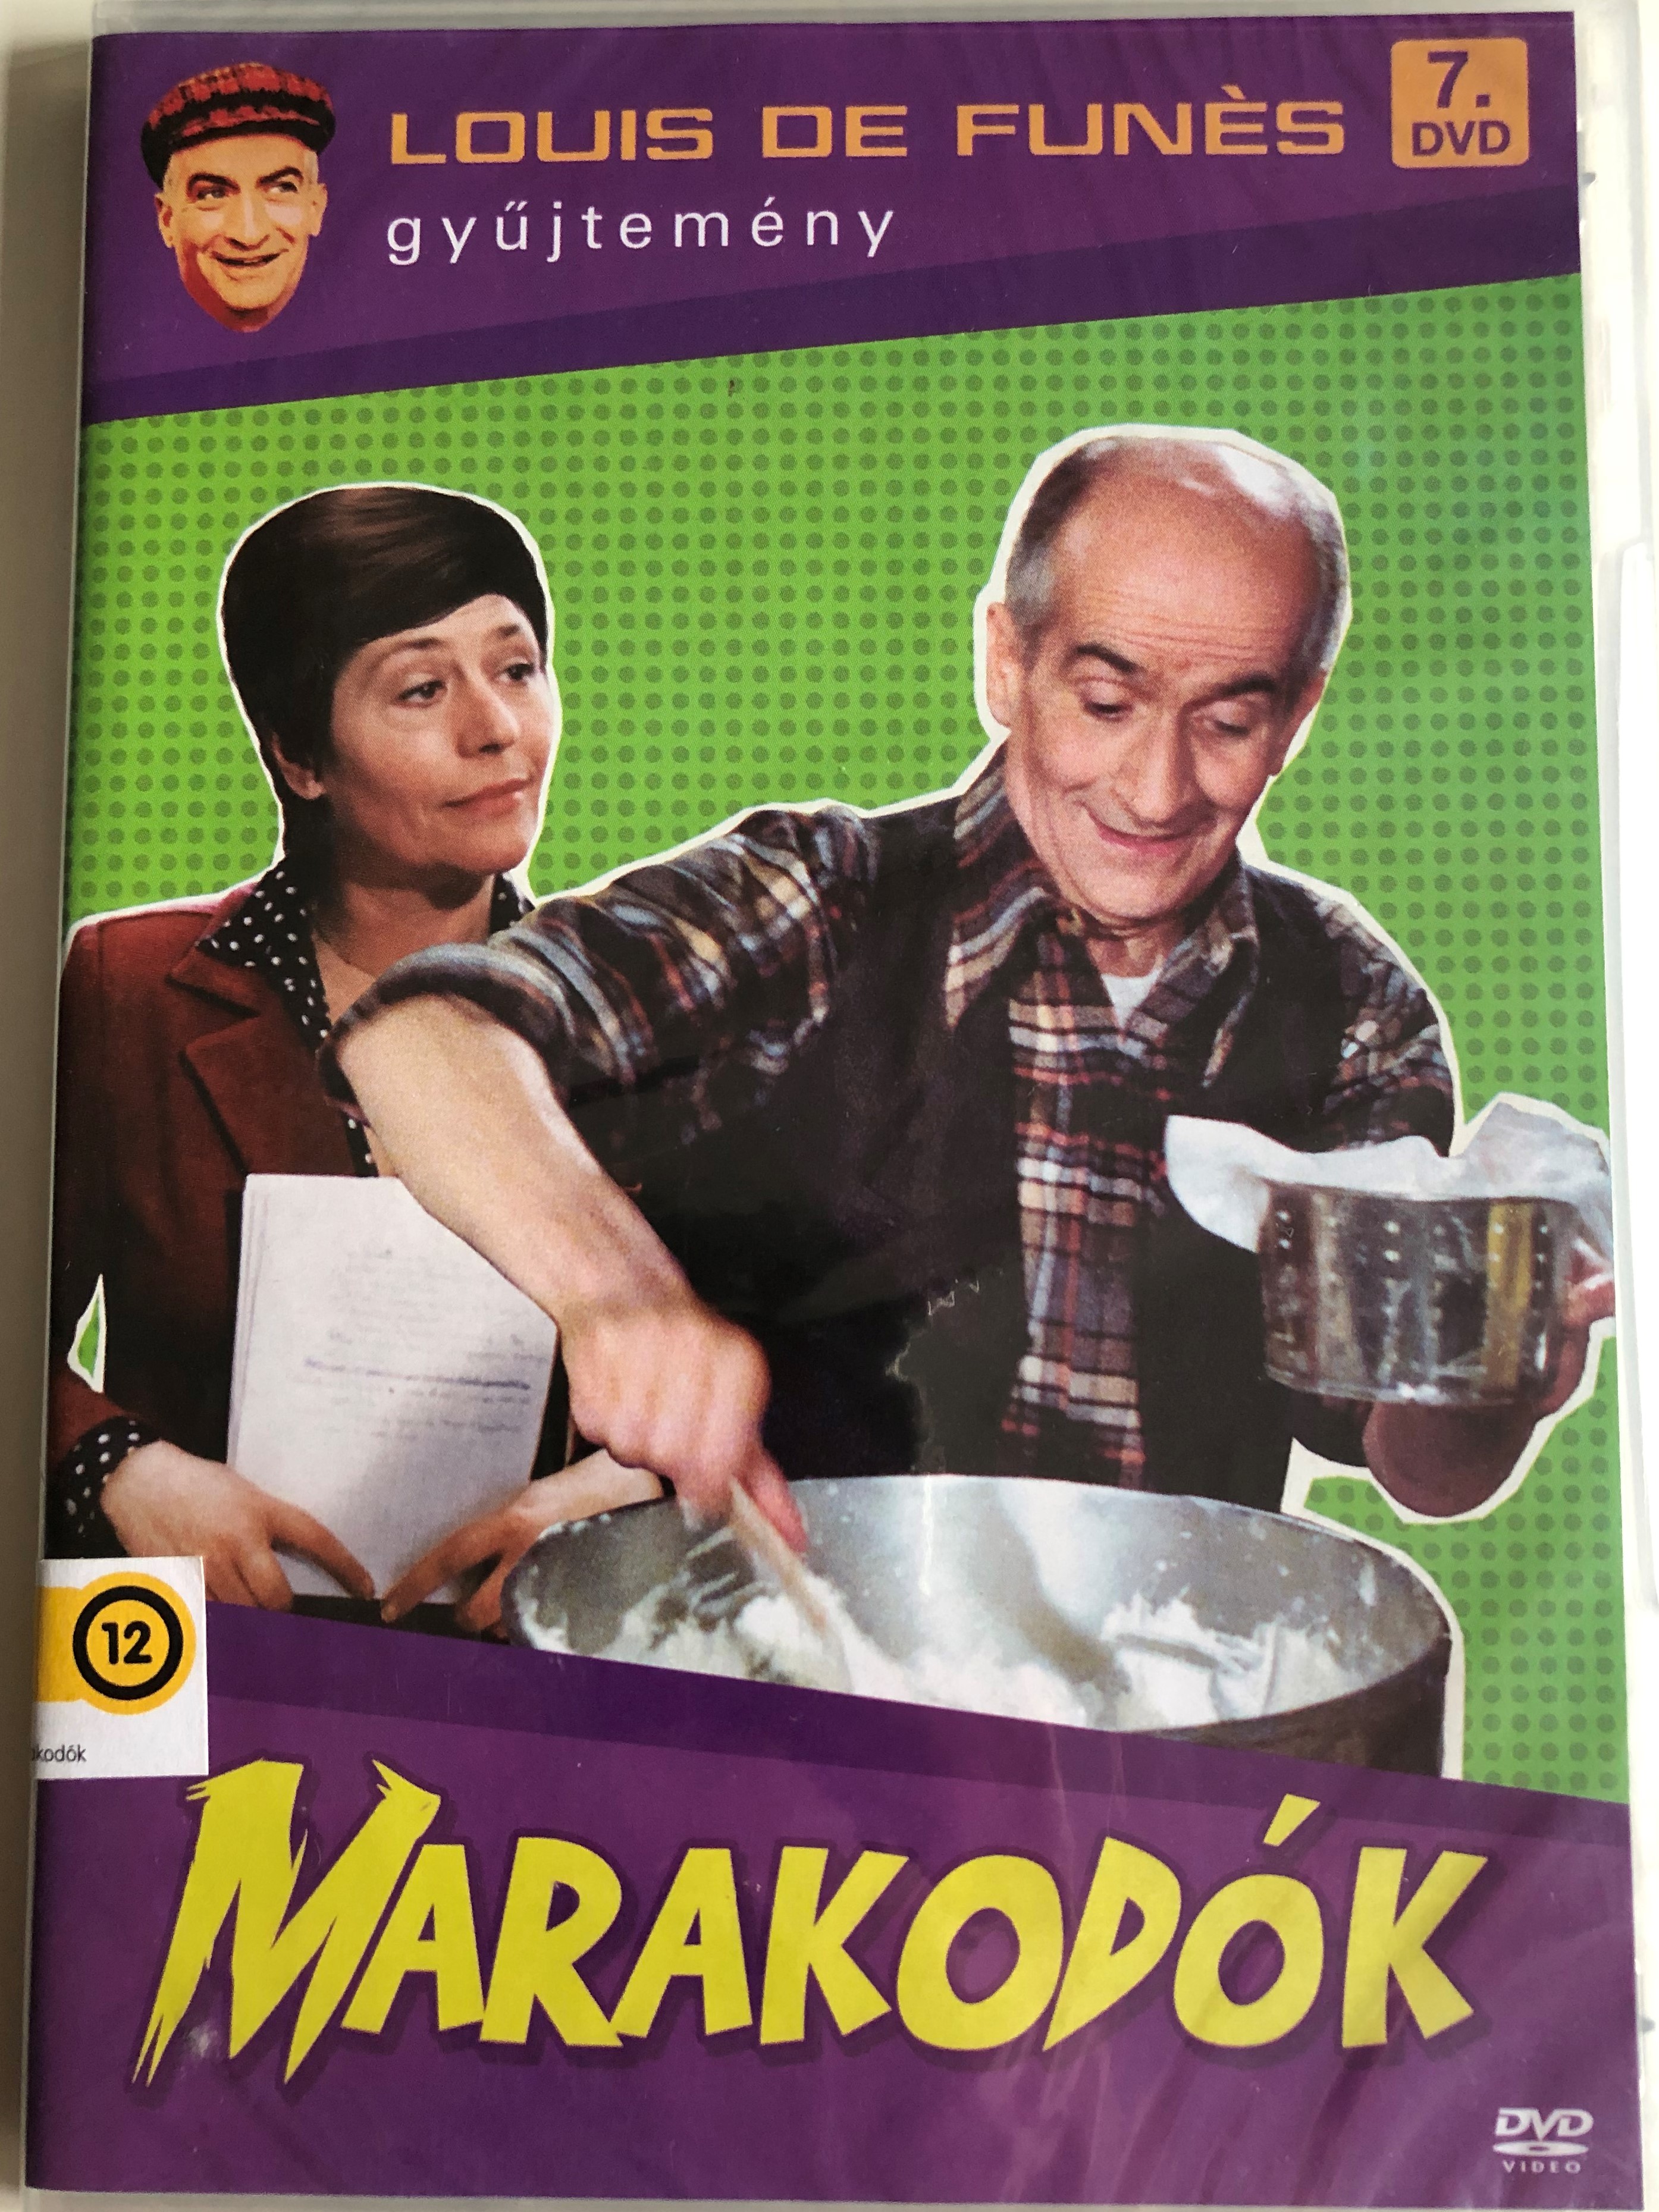 La Zizanie DVD 1978 Marakodók (The Spat) / Directed by Claude Zidi /  Starring: Louis de Funès, Annie Girardot - bibleinmylanguage